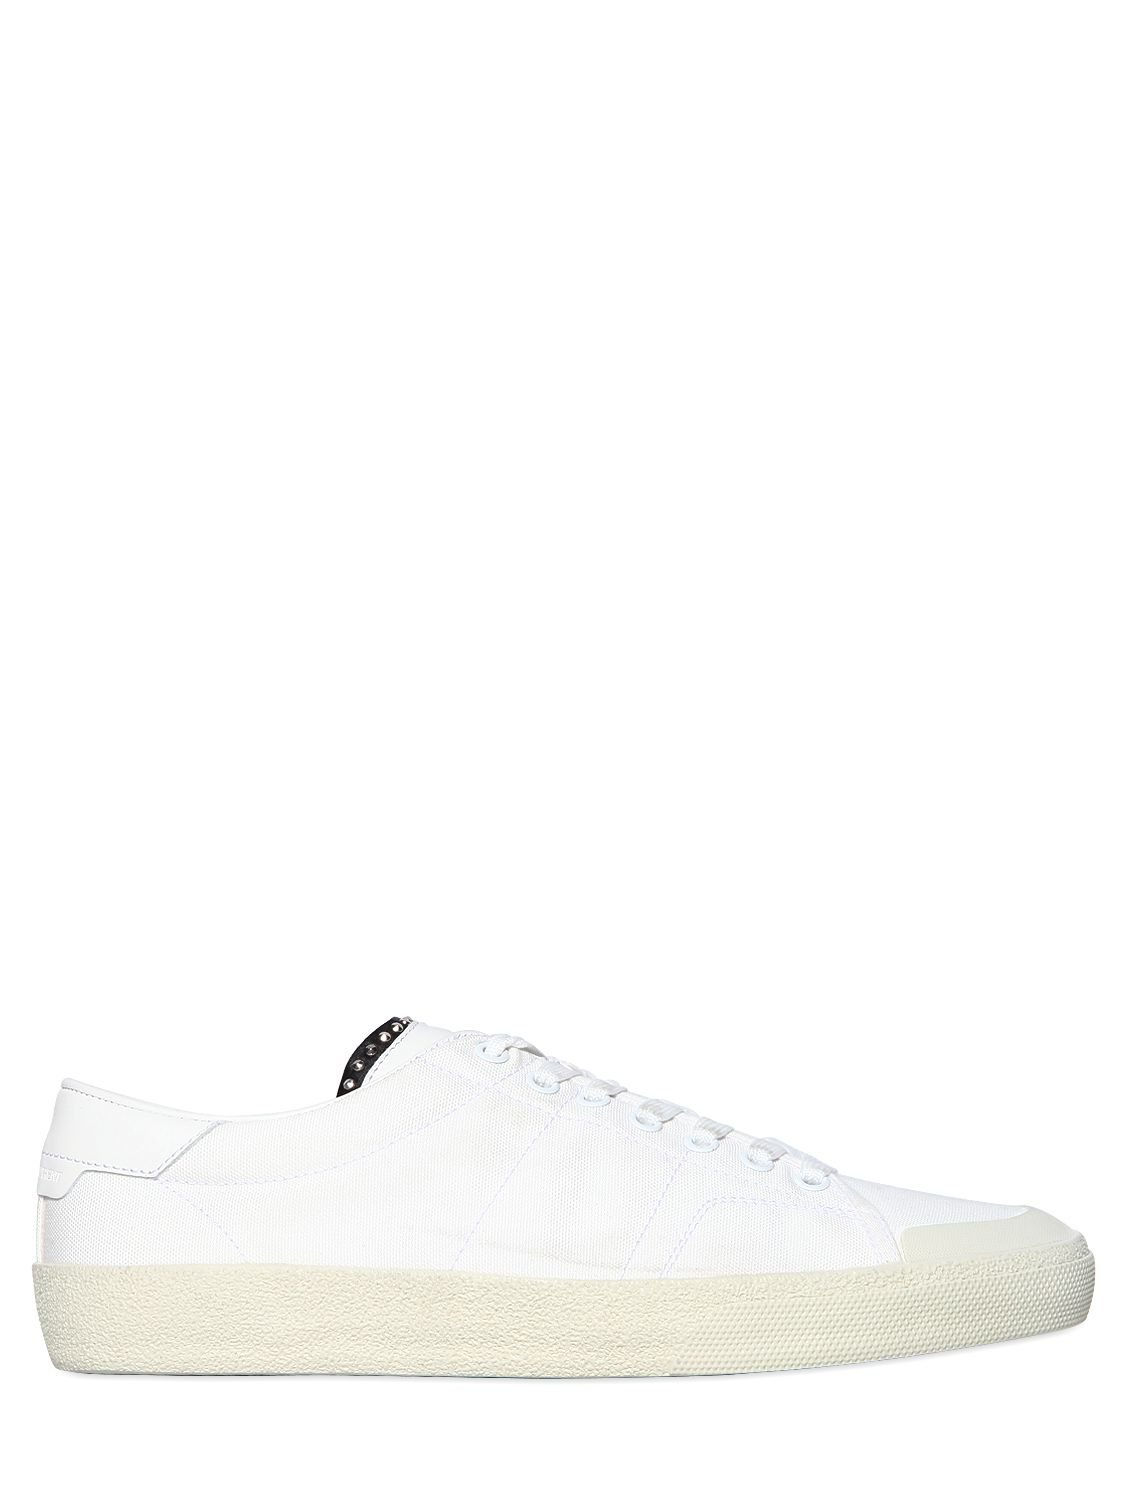 saint-laurent-white-court-classic-surf-canvas-sneakers-product-5-592256786-normal.jpeg